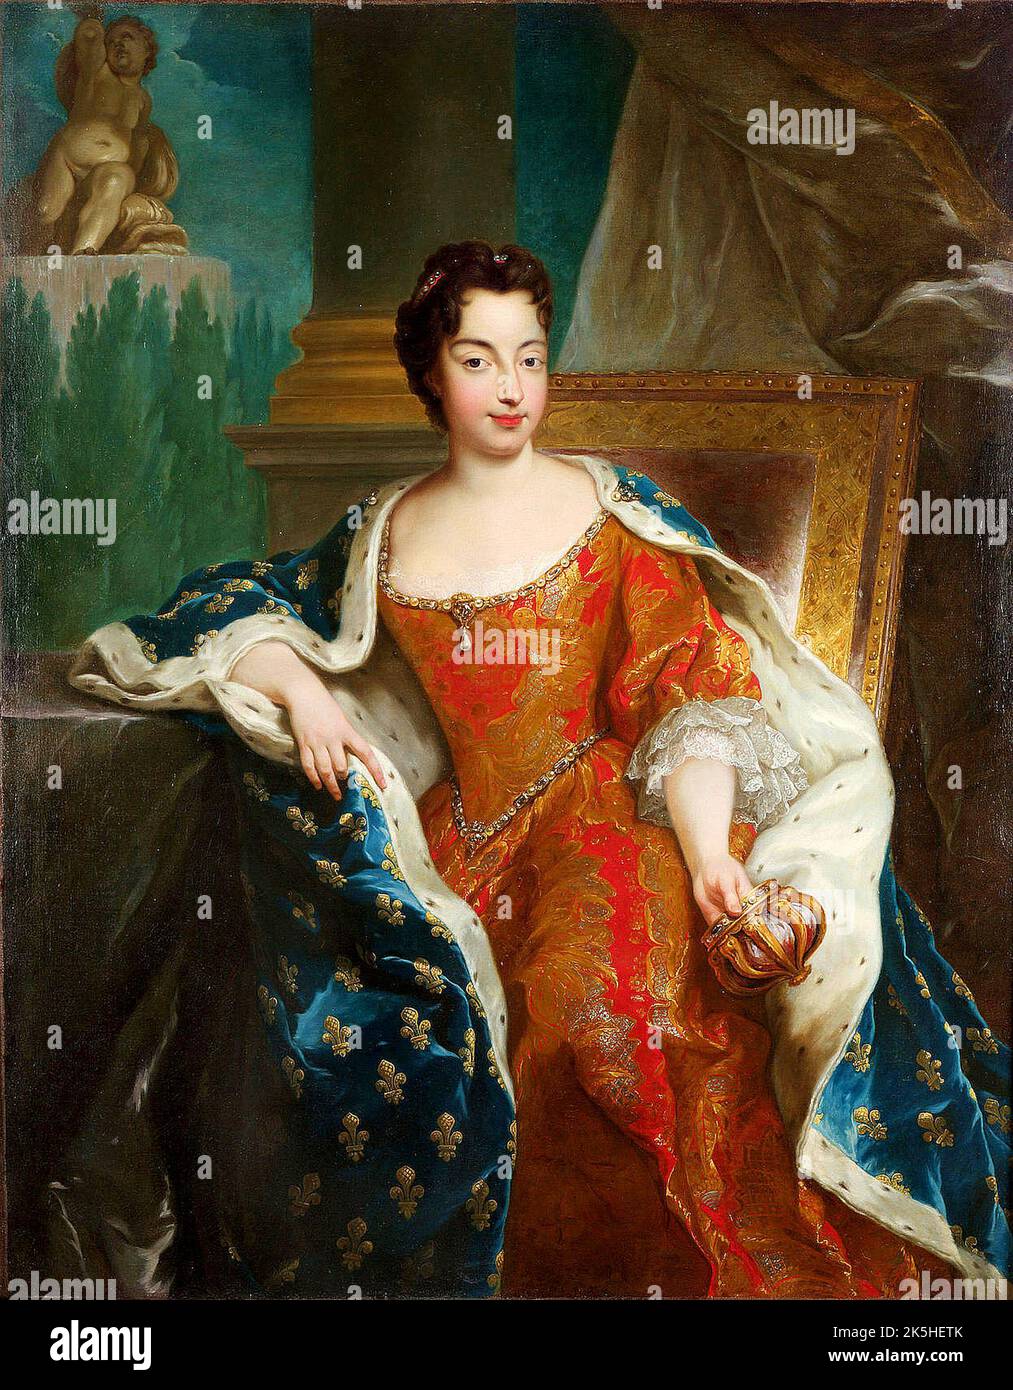 La Dauphine de Francia, después de 1690 Pintura de Jean François de Troy. Maria Anna Christine Victoria de Baviera (1660 – 1690) Dauphine de Francia. Era conocida como la Grande Dauphine. Foto de stock